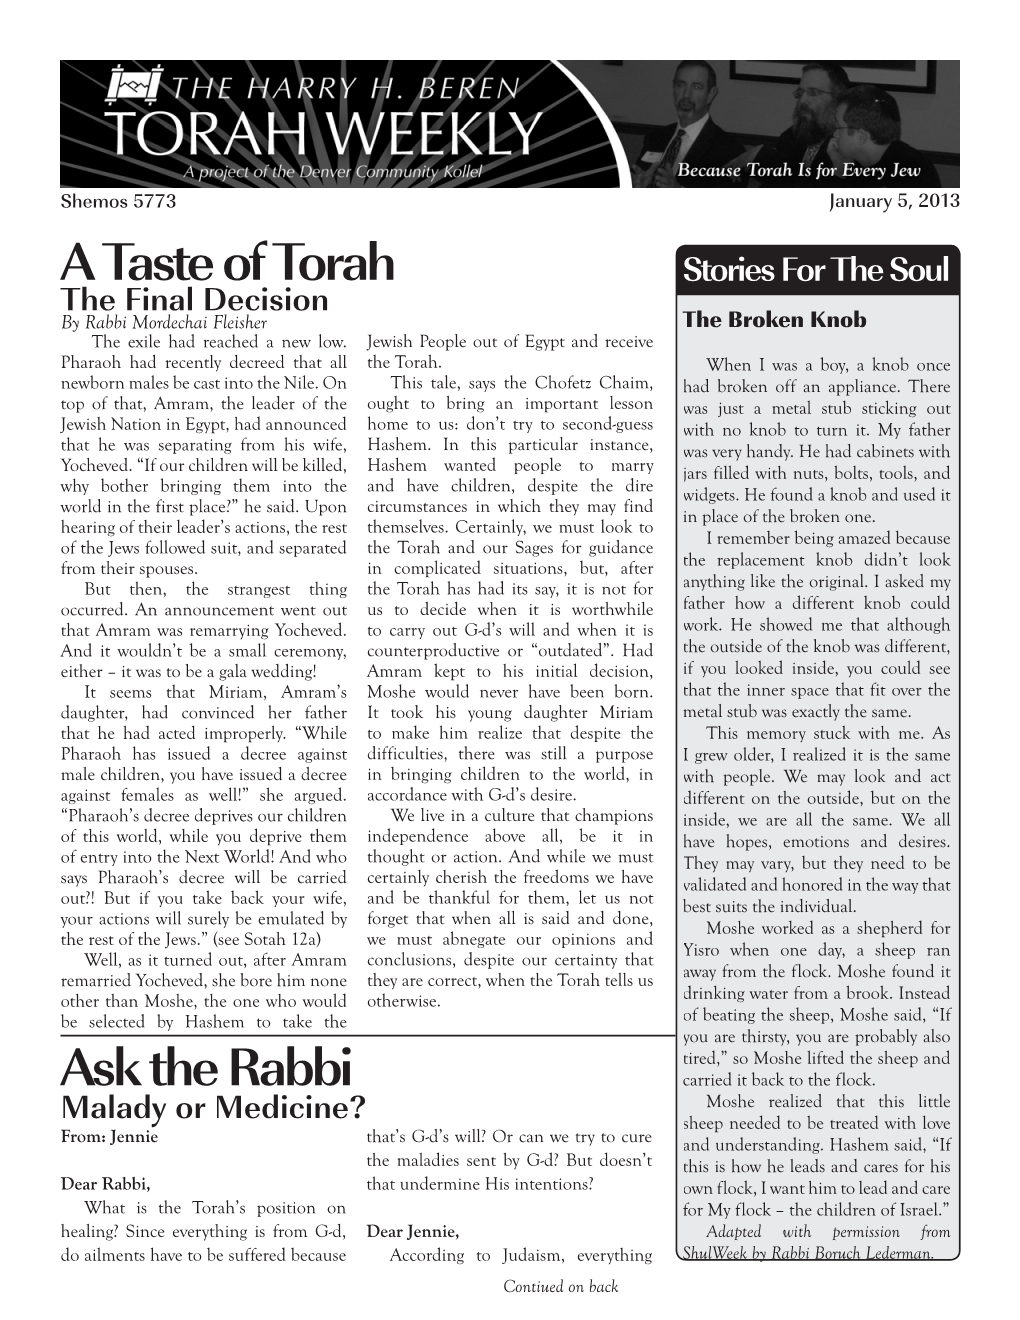 A Taste of Torah Ask the Rabbi